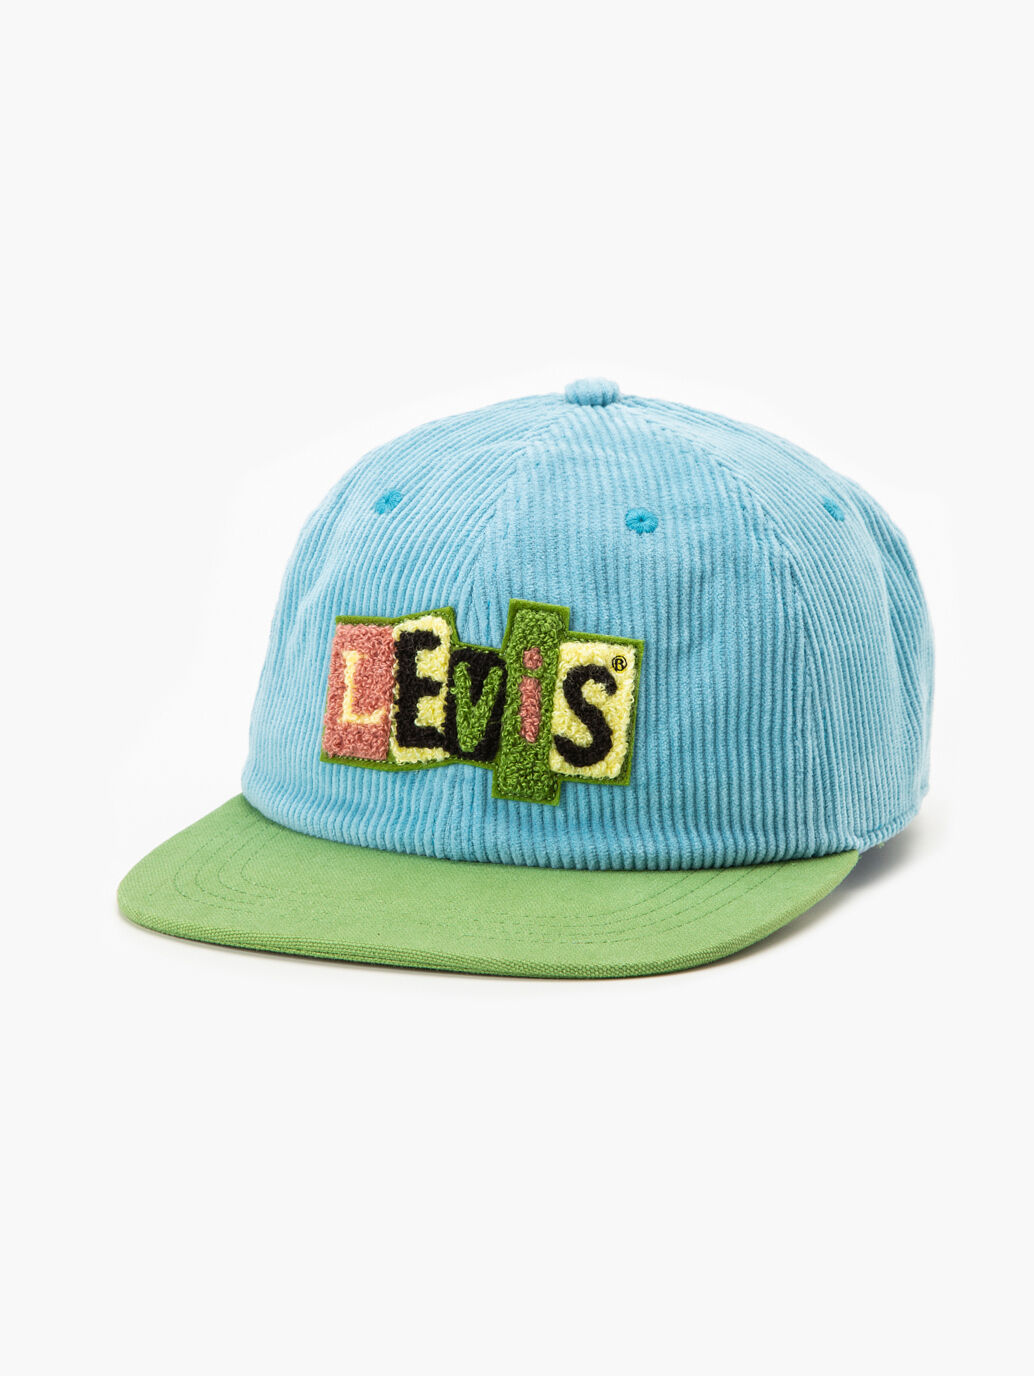 Levi's® Men's Skate Cap